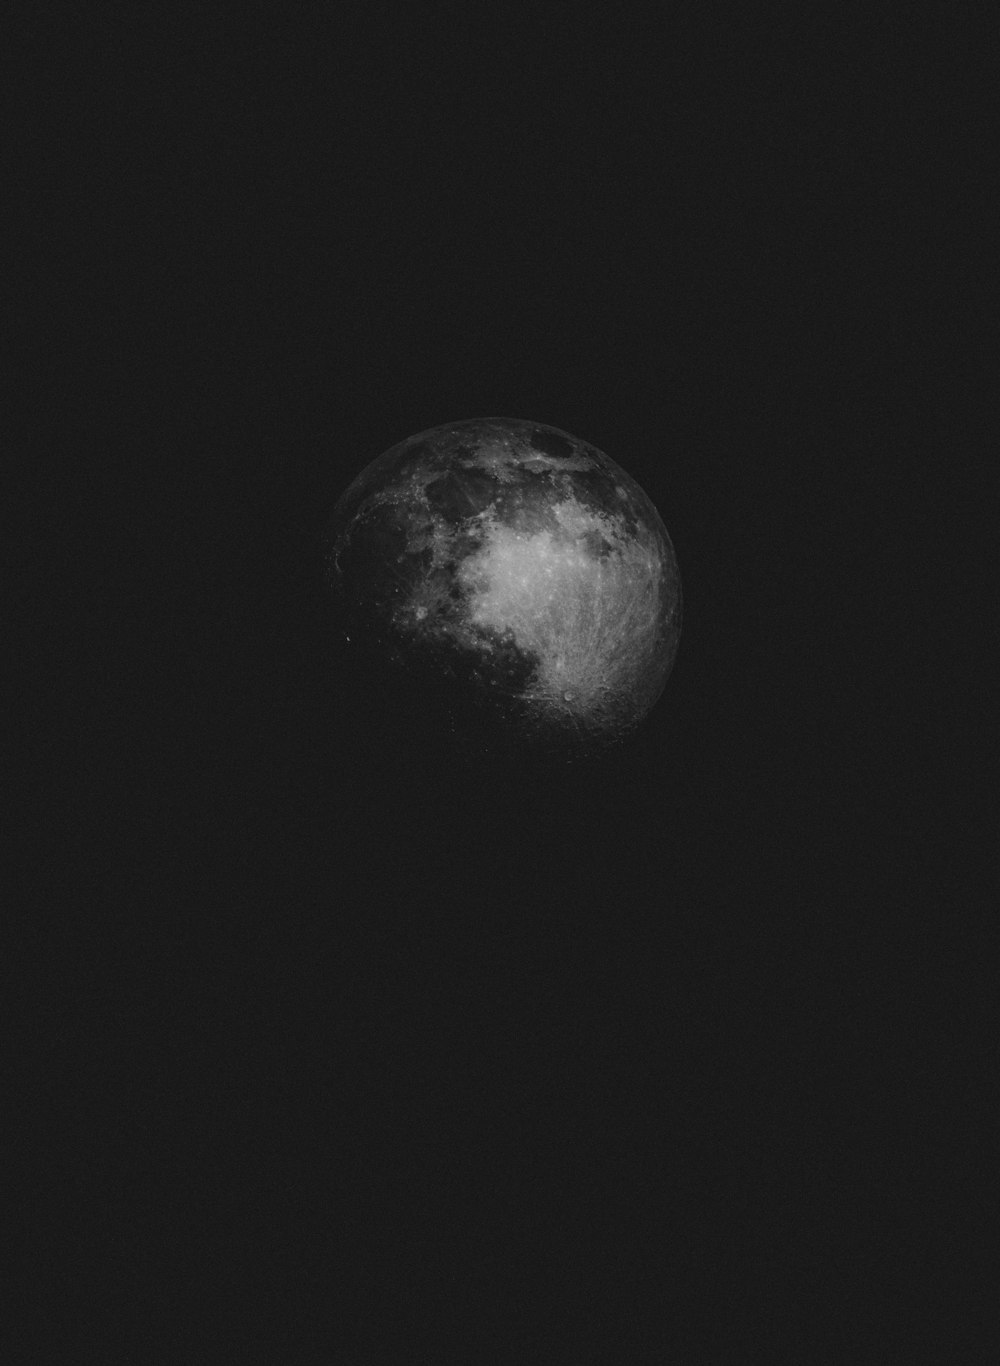 grayscale photo of moon in dark night sky